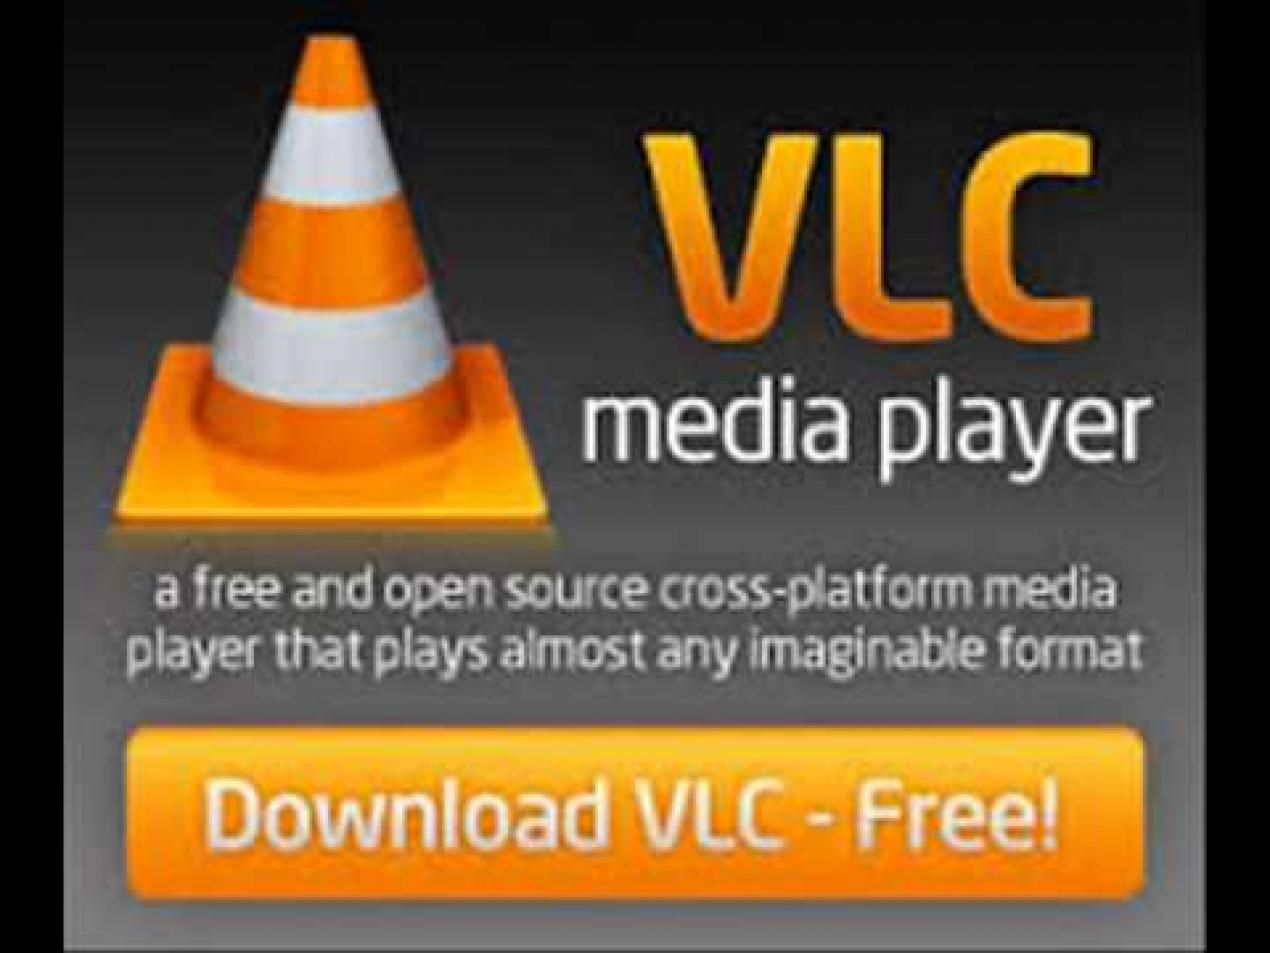 vlc player free download